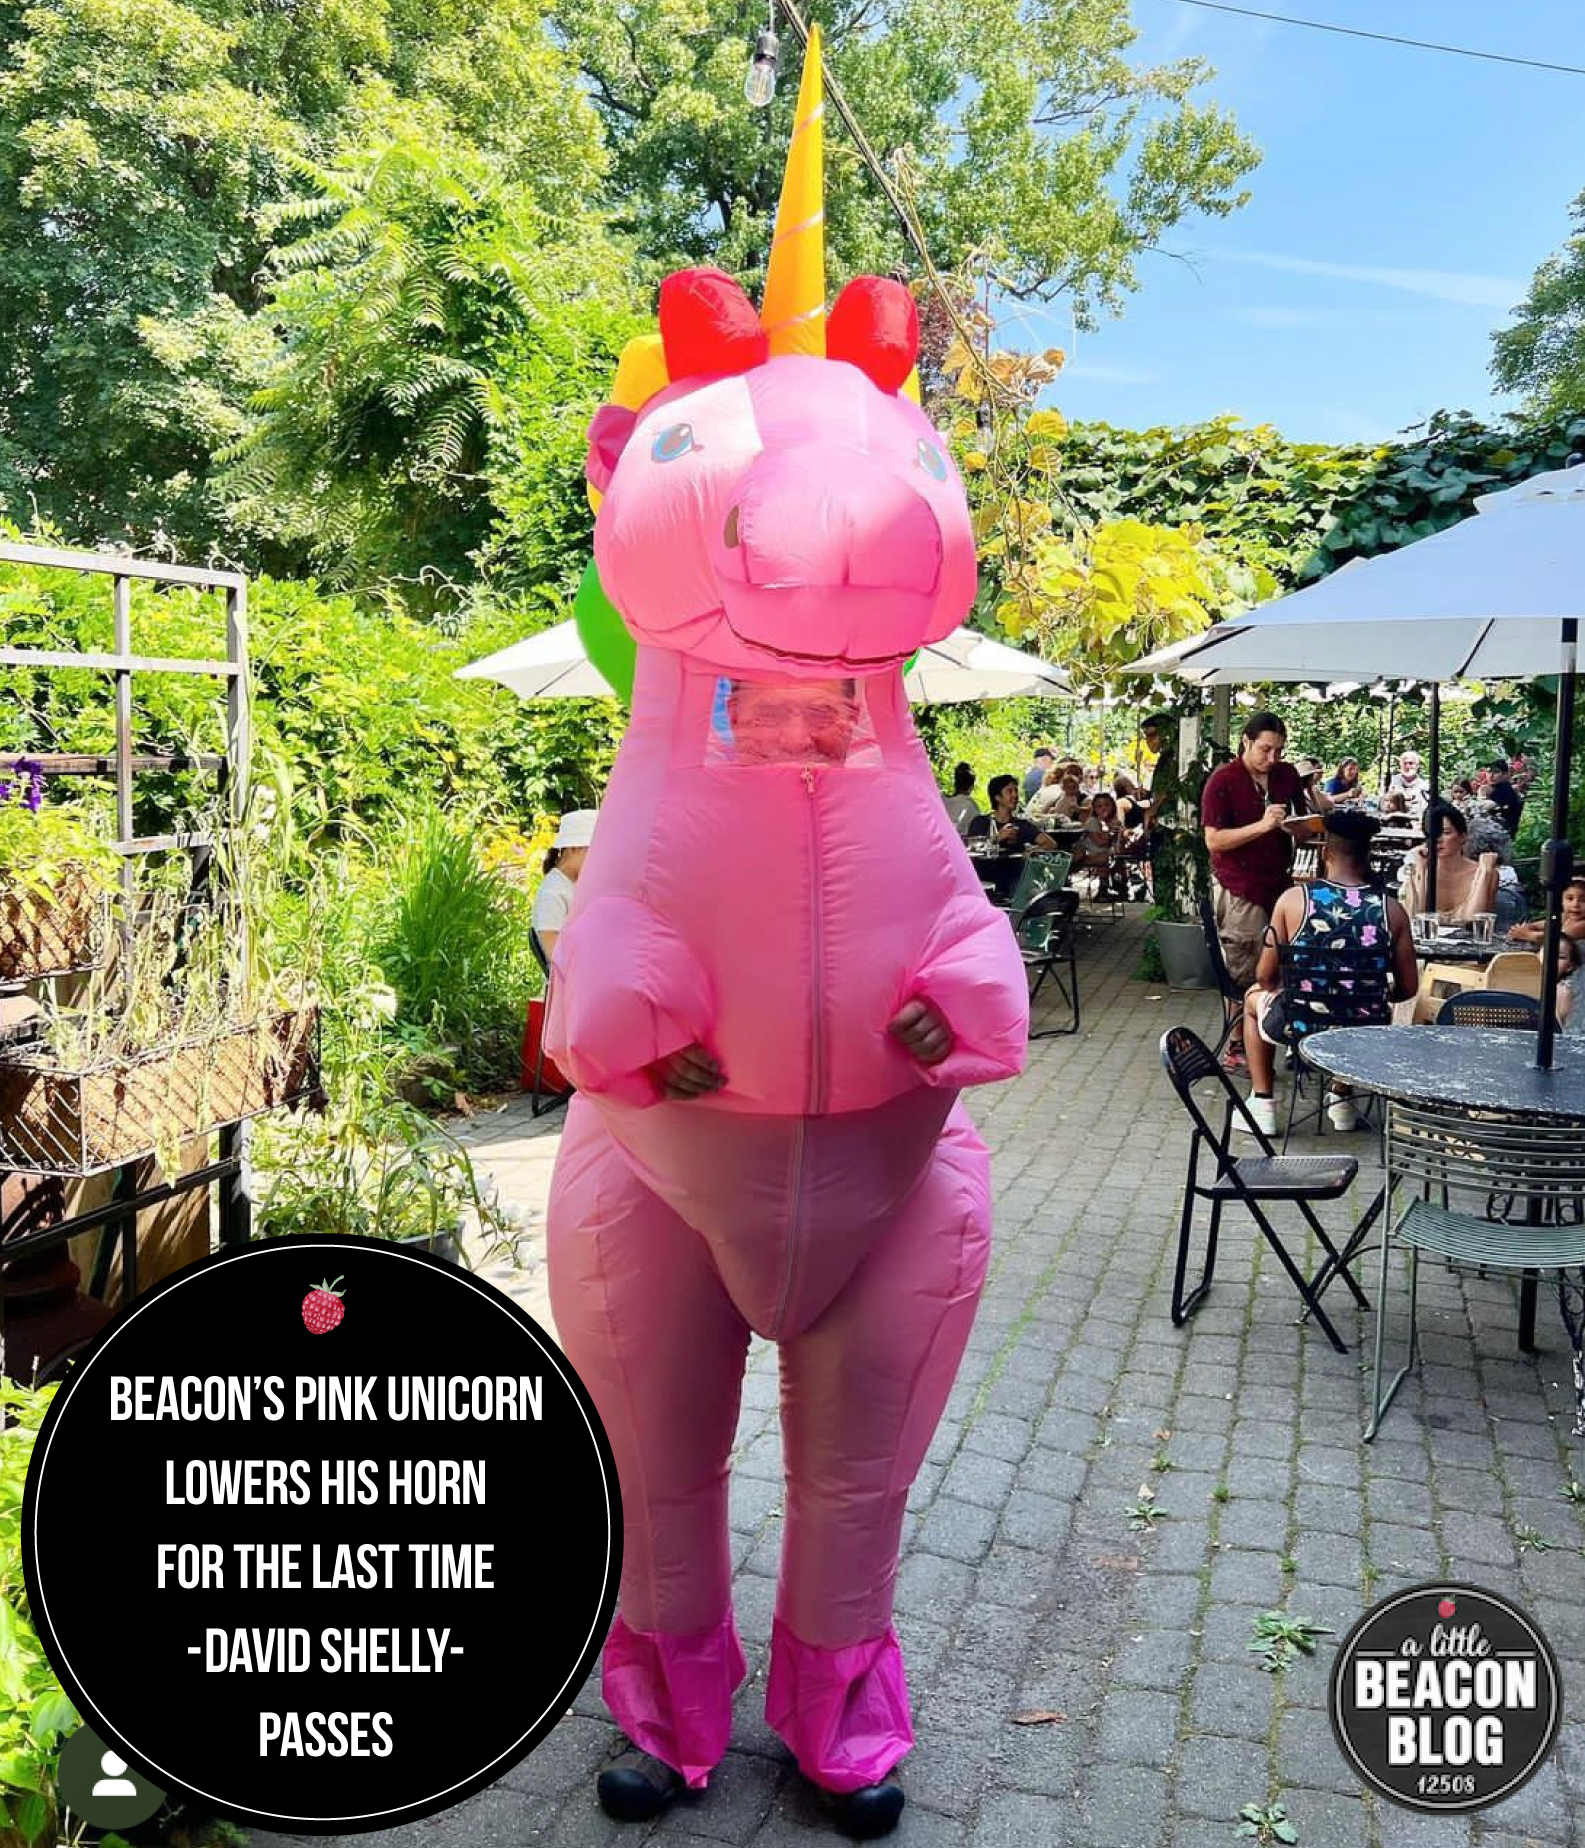  I AM 6 LET'S CELEBRATE: Pink Unicorn journal